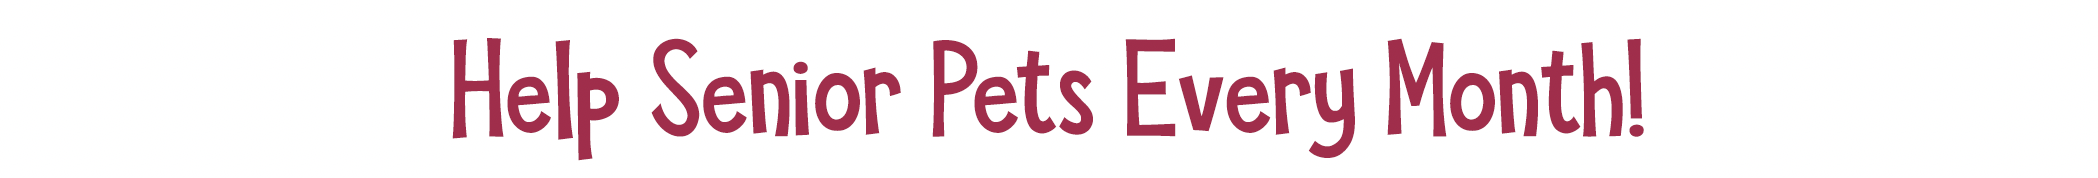 help senior pets